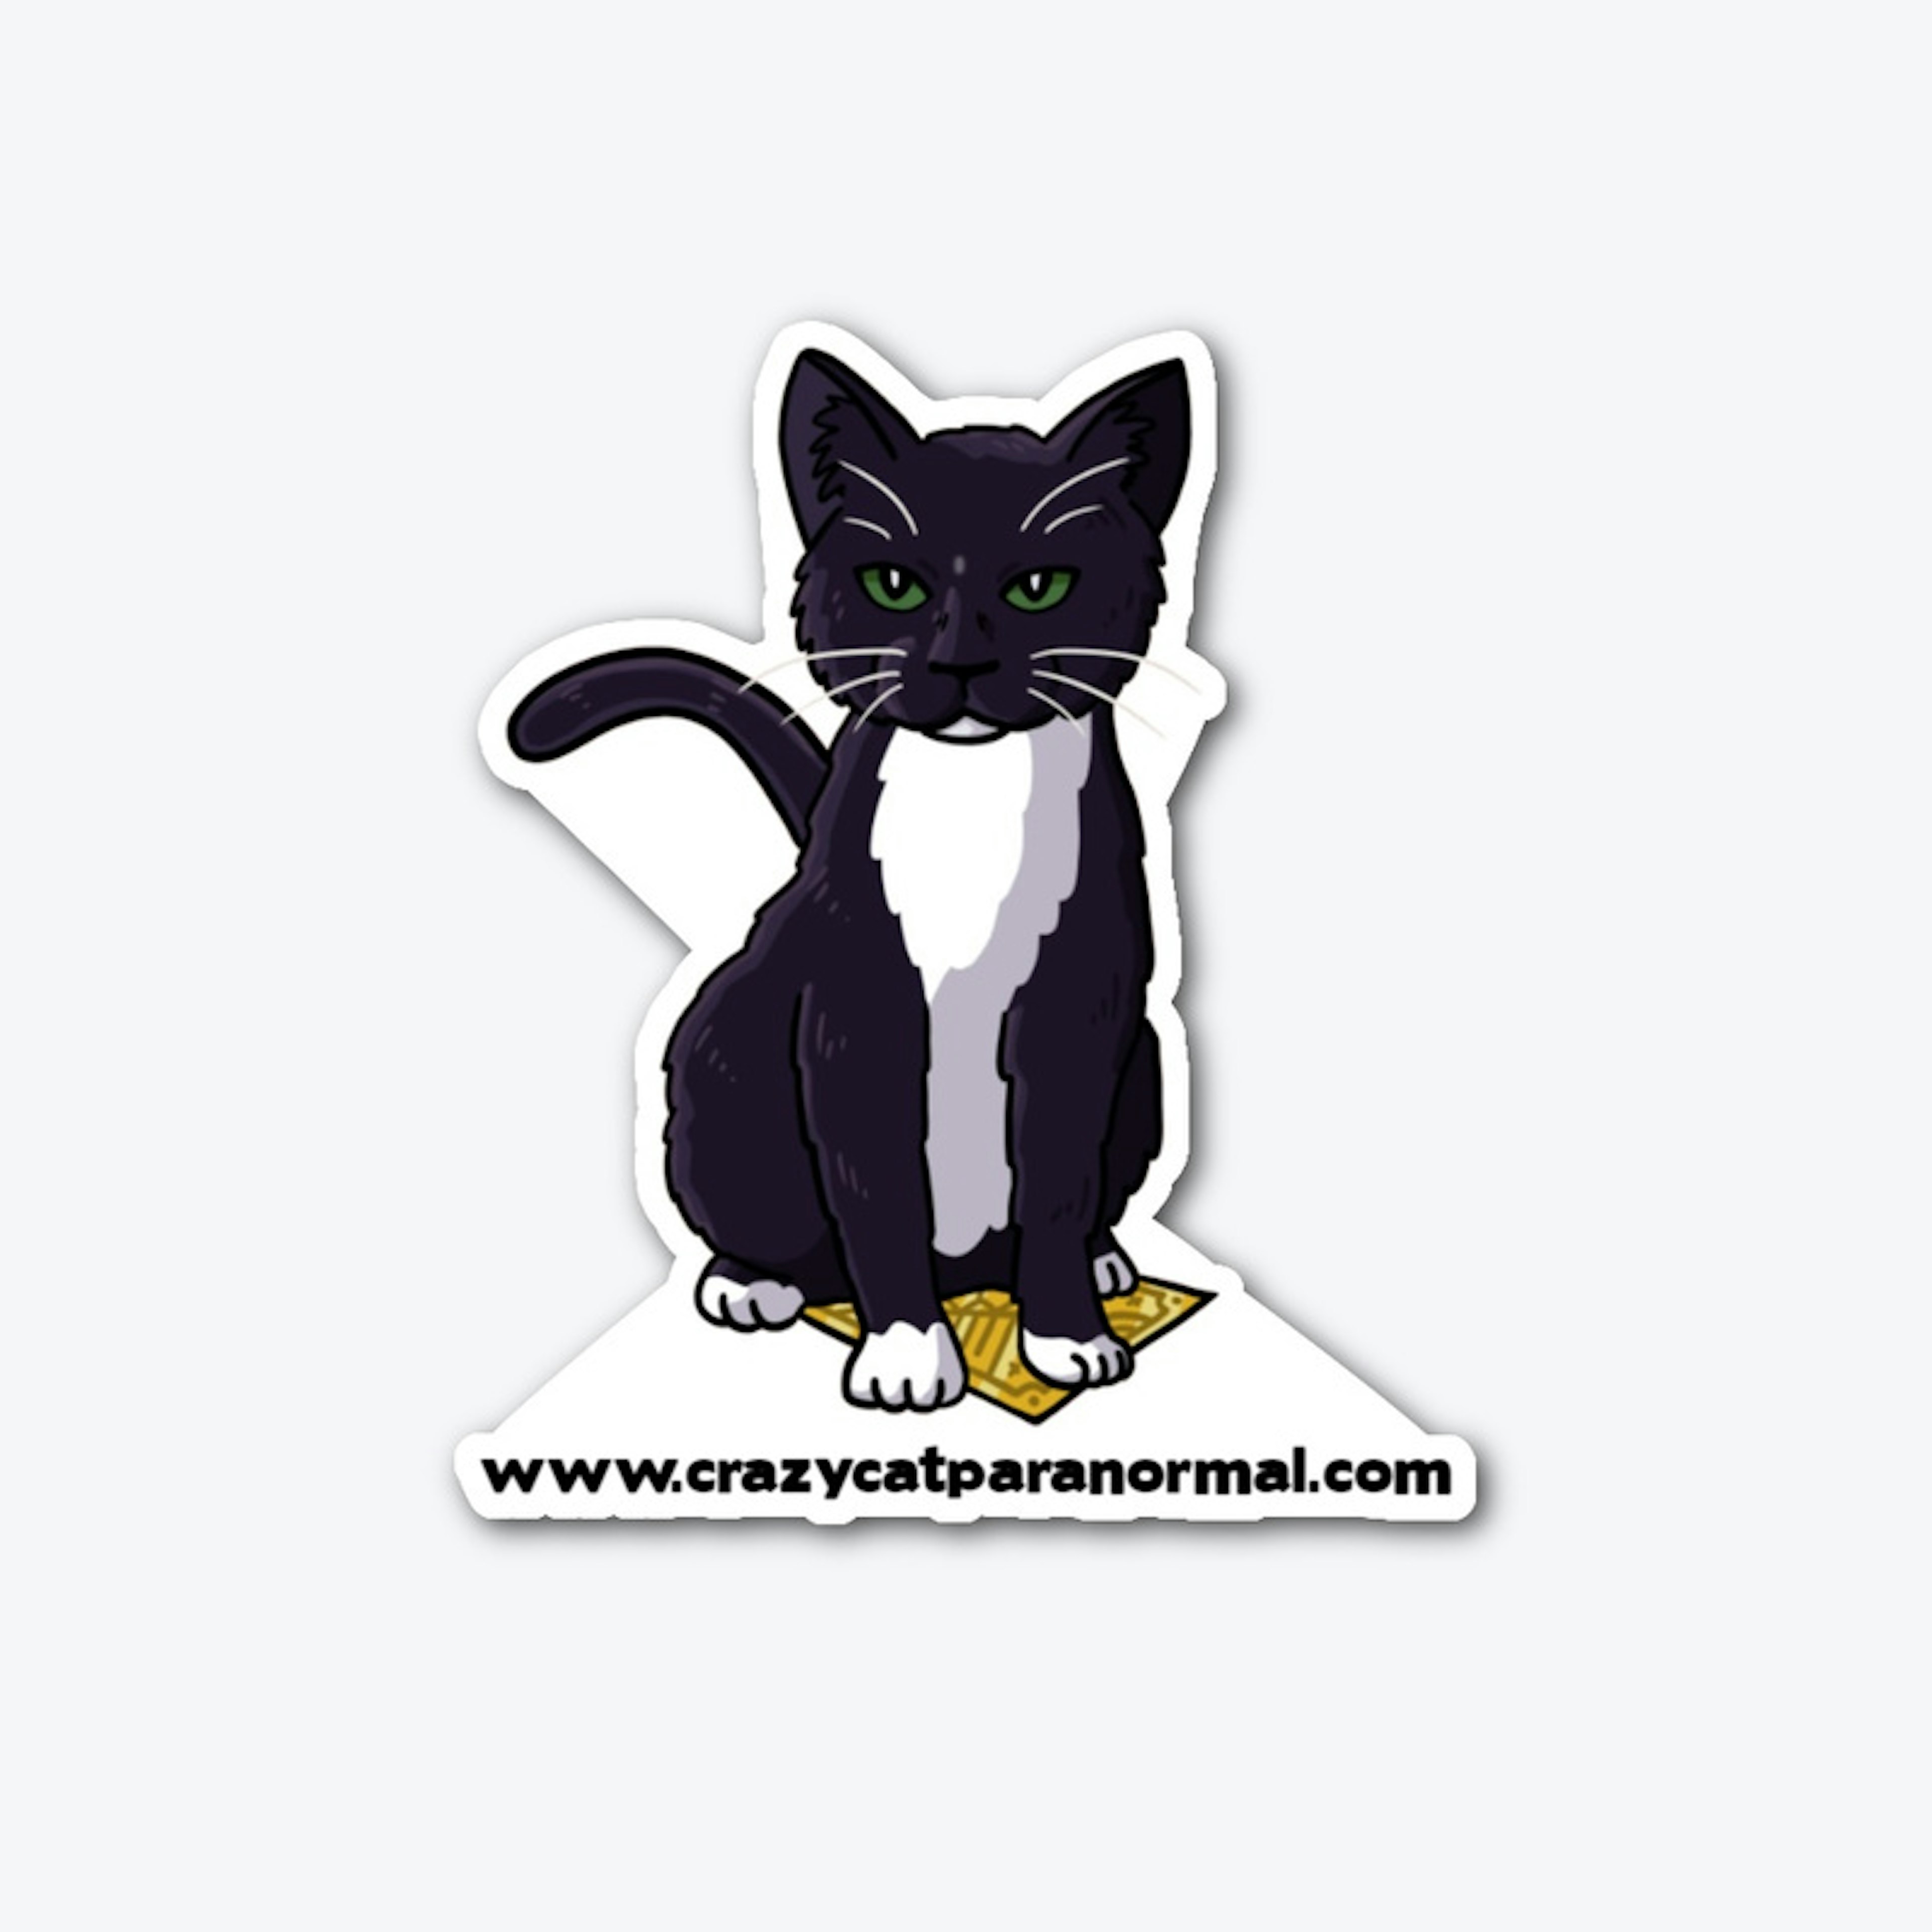 Crazy Cat Paranormal Merch!